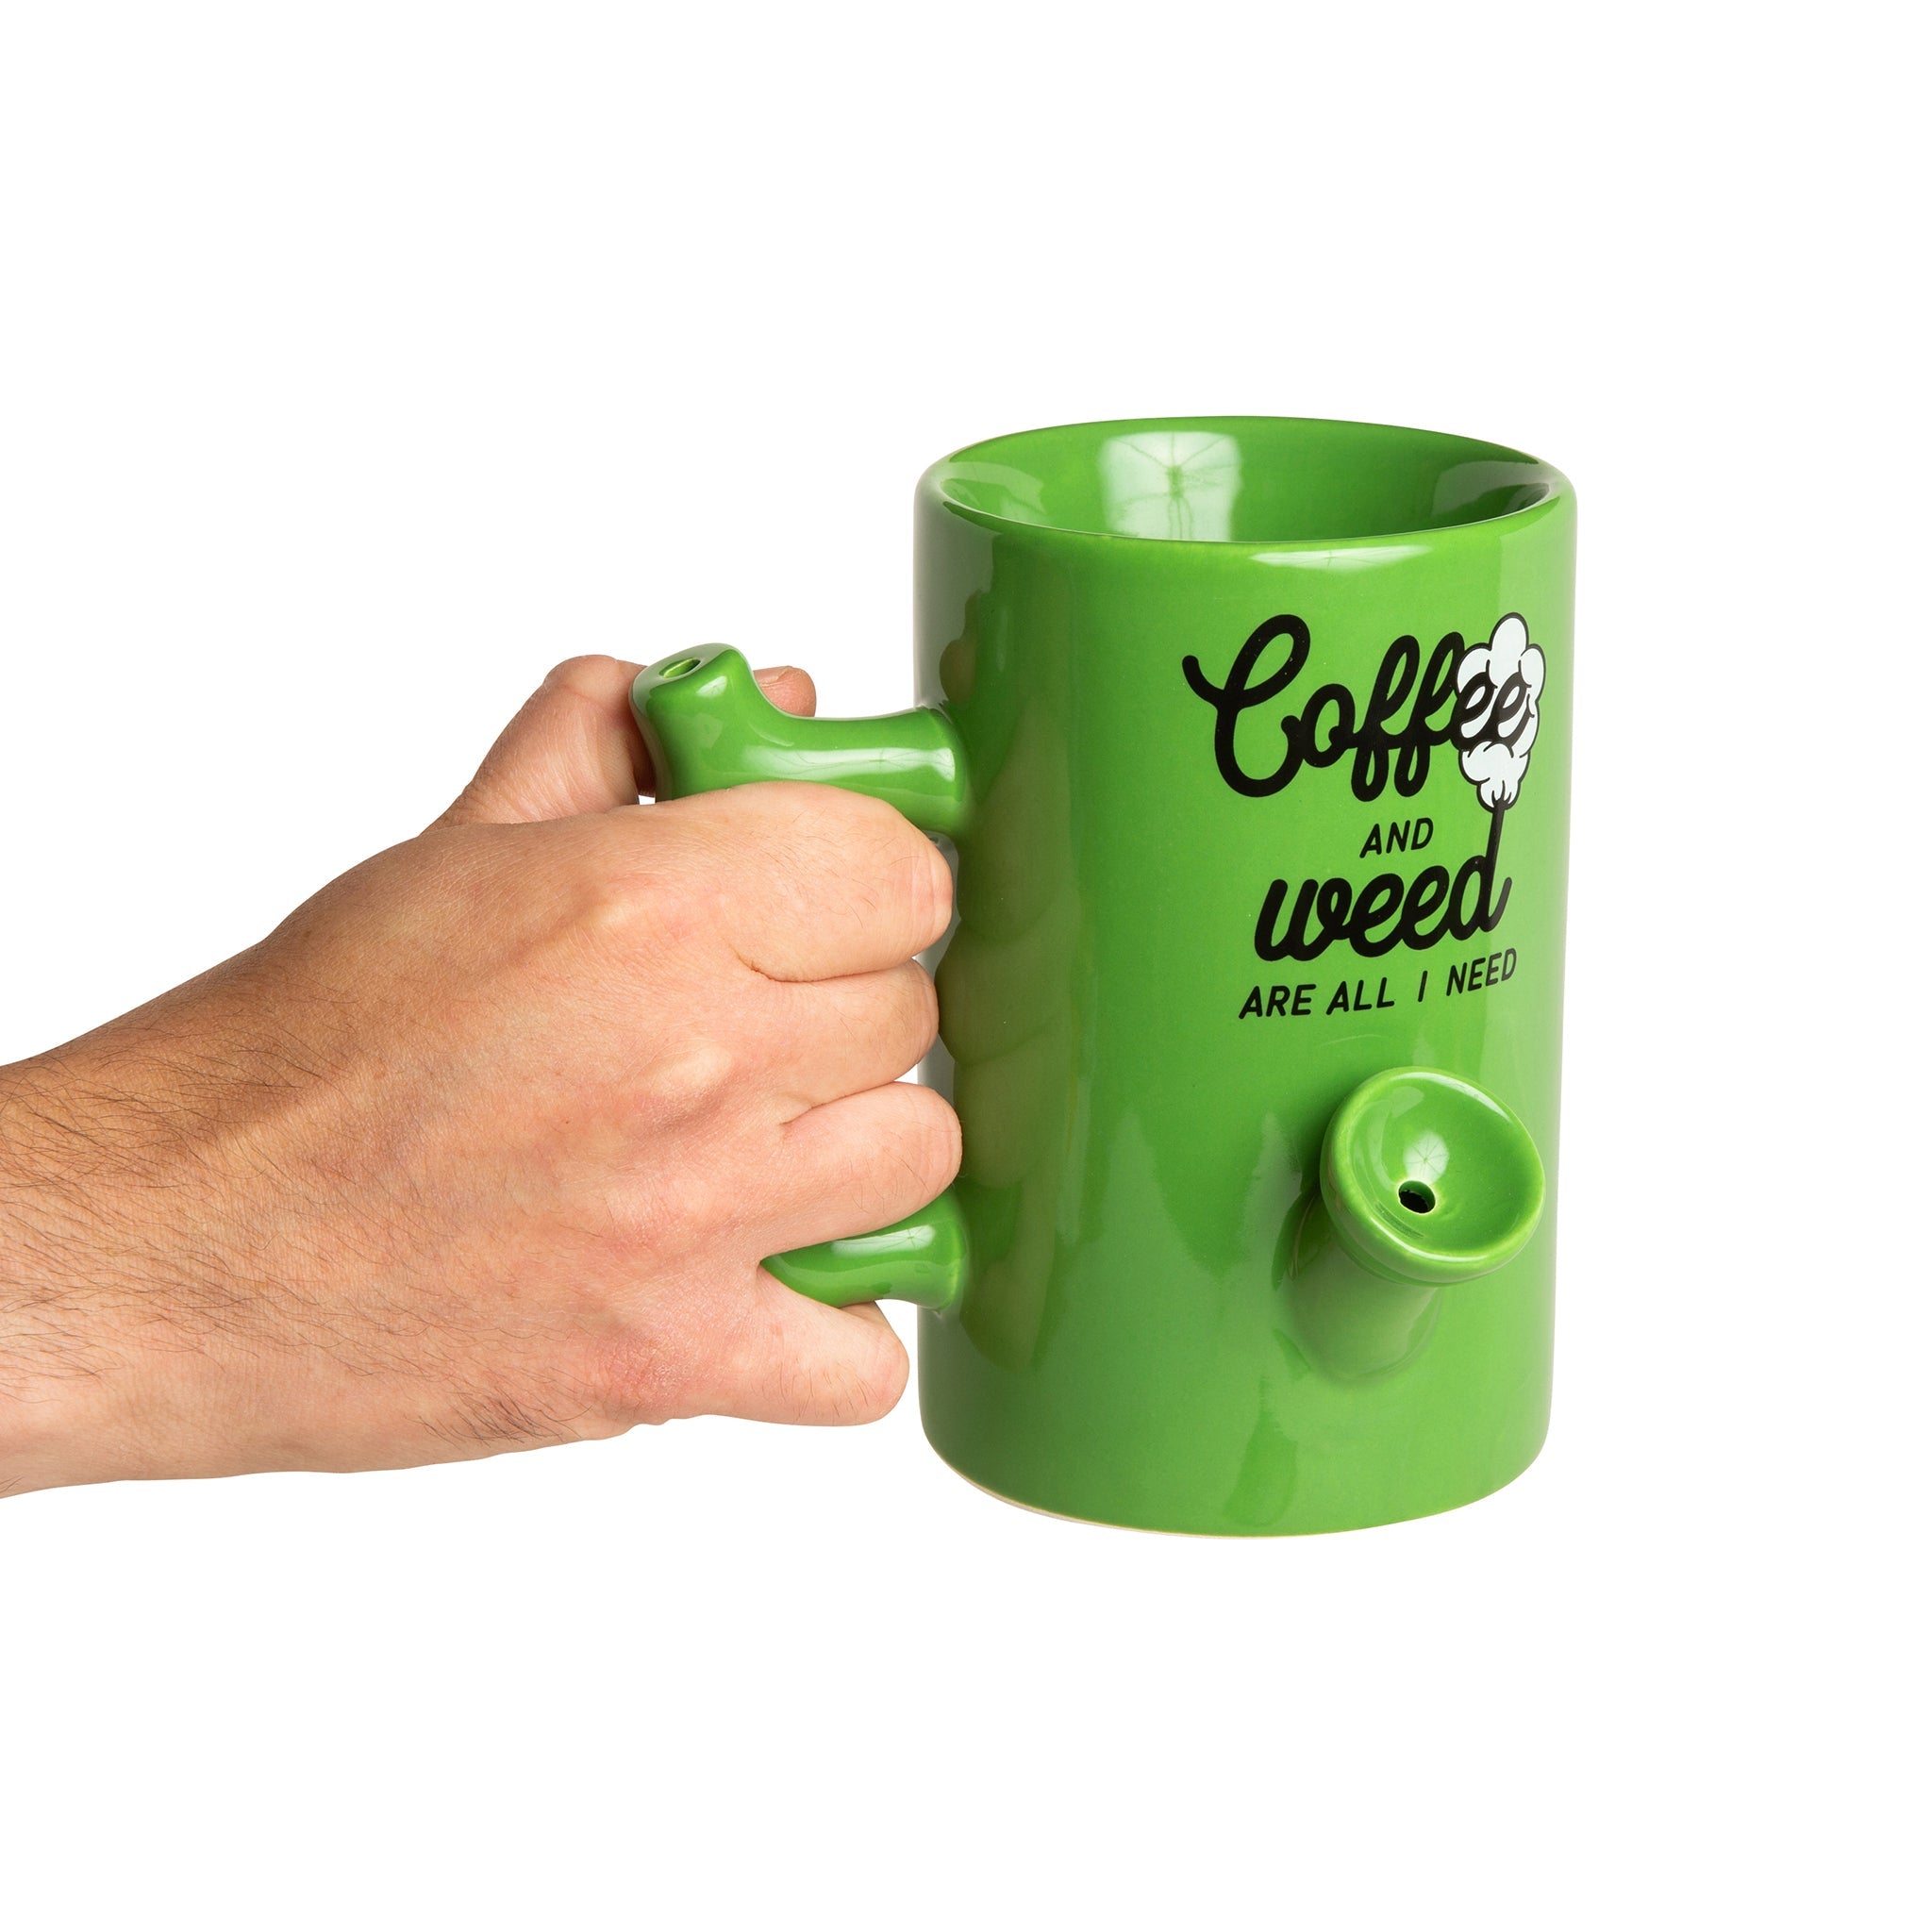  BigMouth Inc. Extra Large Coffee Mug 64 Oz - Giant Coffee Mugs  for Coffee Lovers - Sturdy Tall Ceramic Coffee Cups - Big Cup for Coffee,  Tea - Microwave Safe 